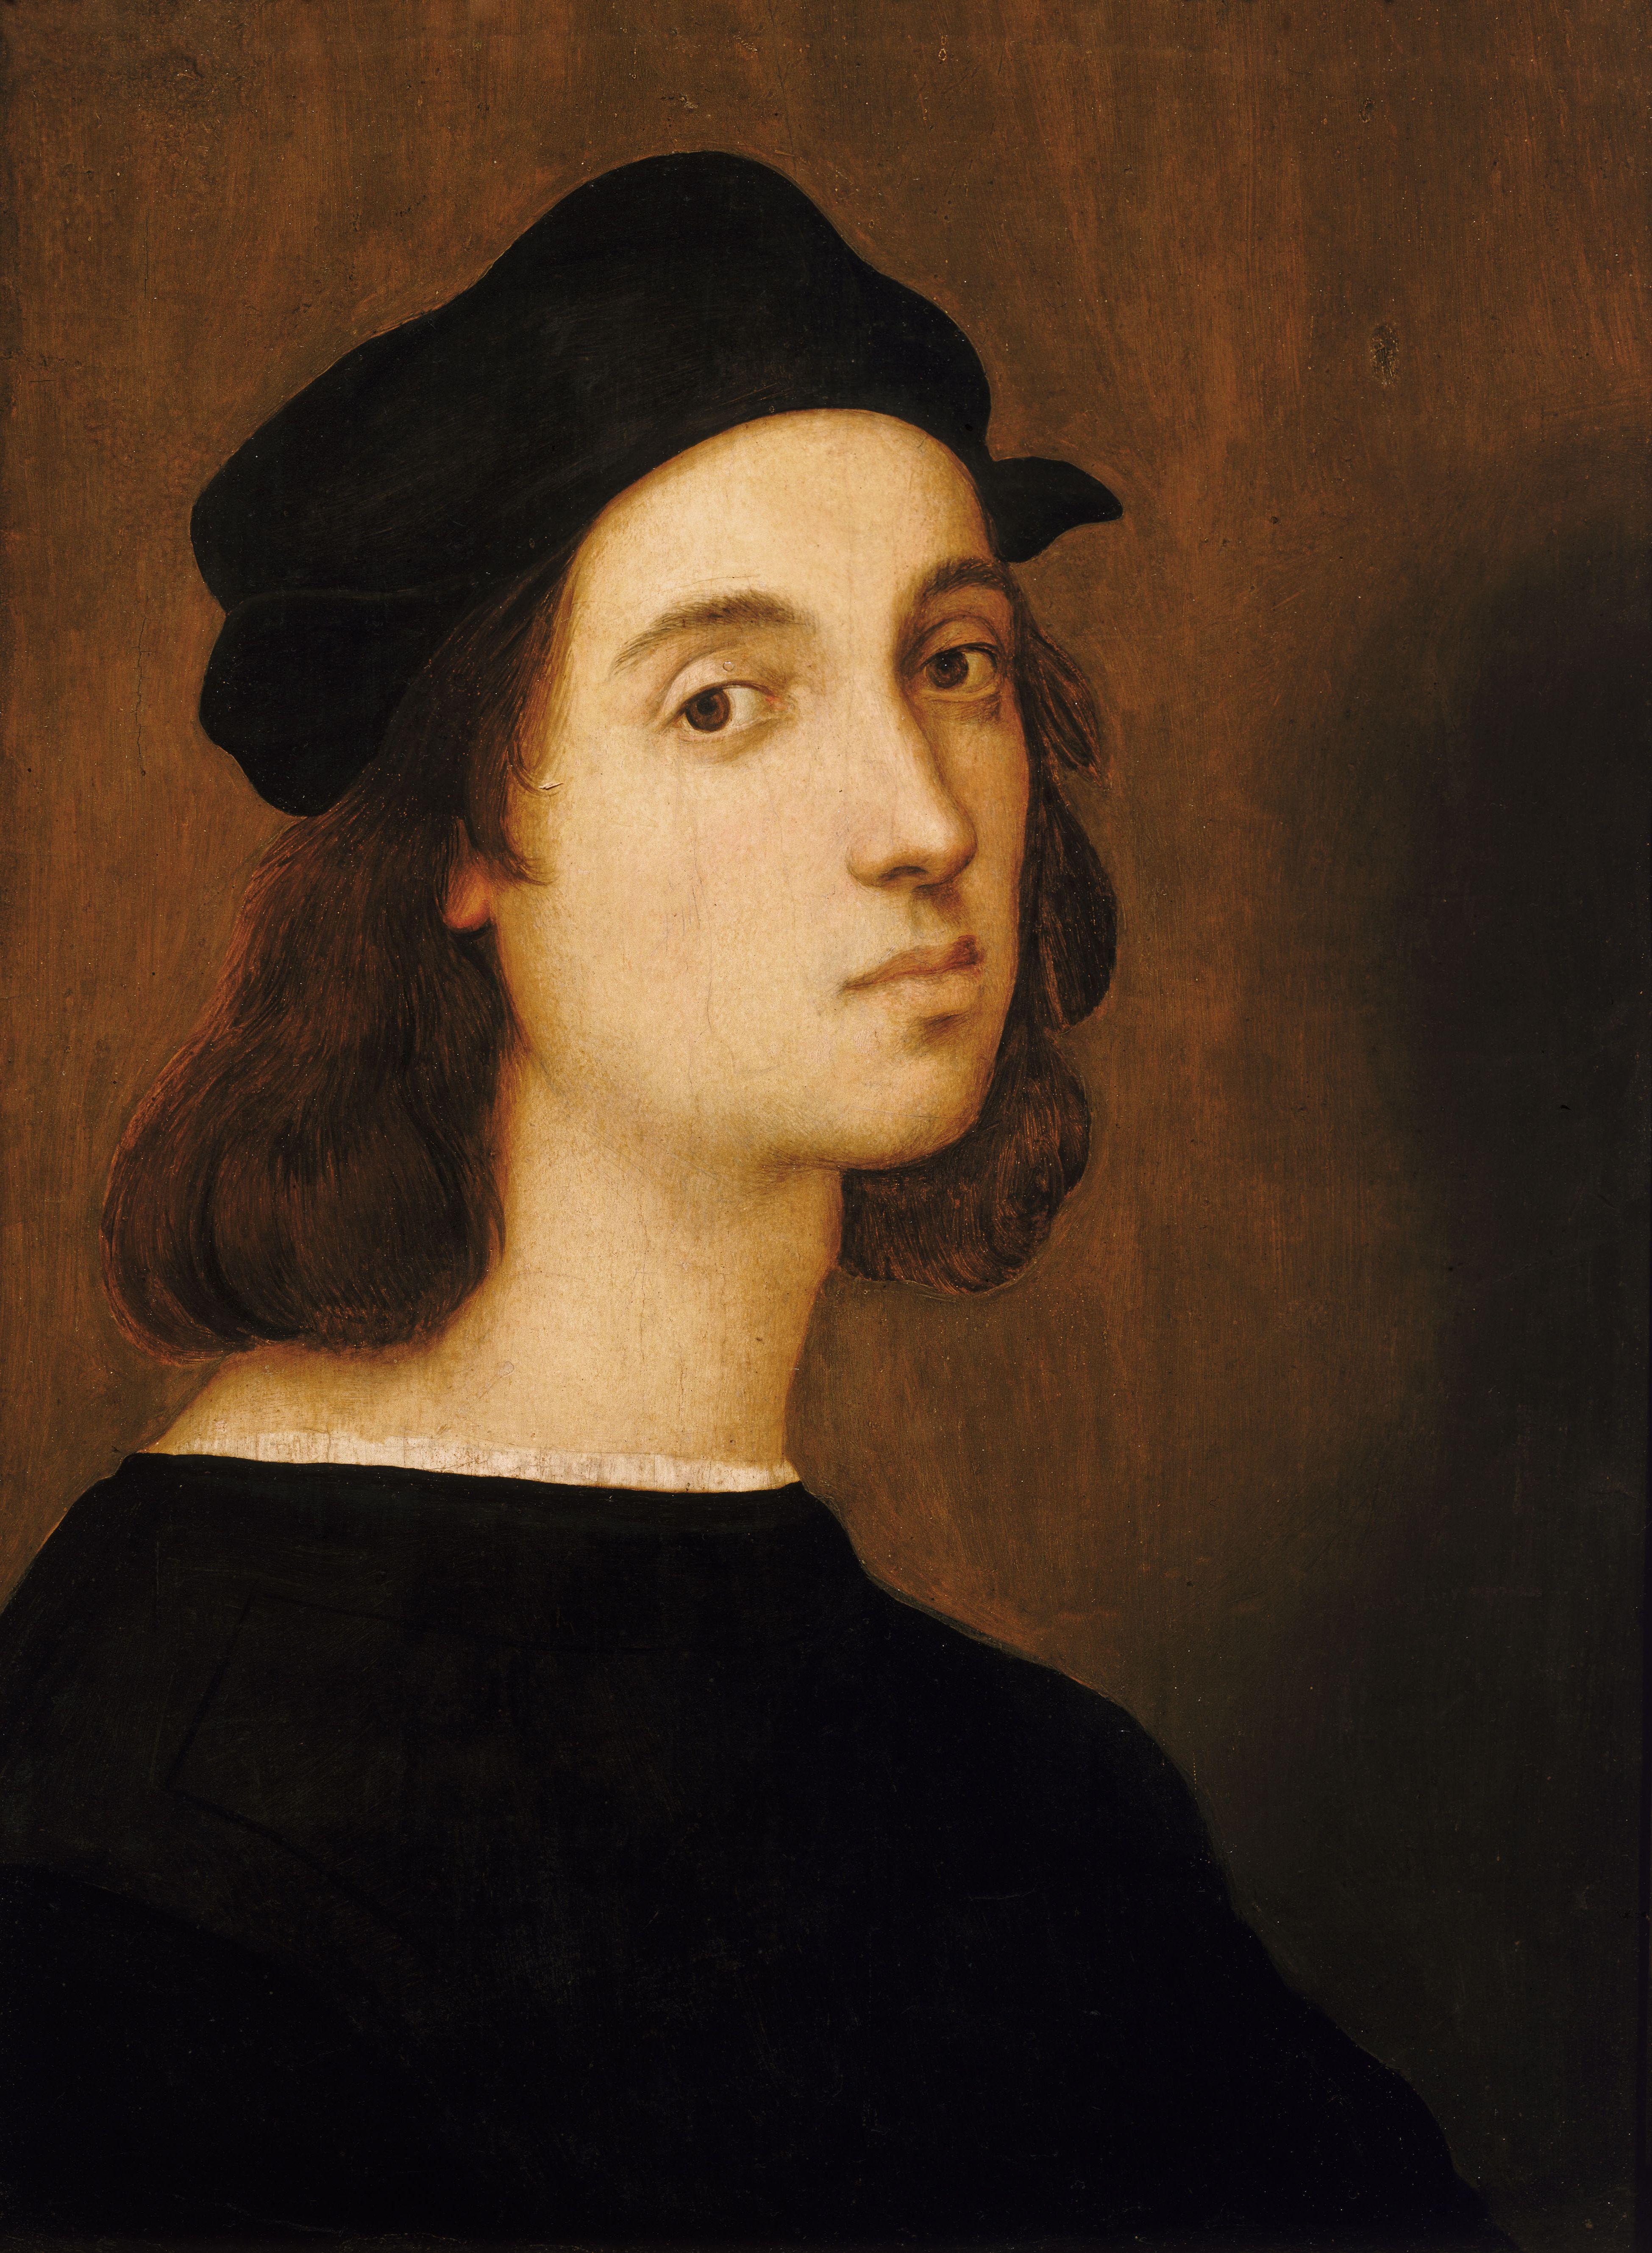 Raphael Santi - 1483 - April 6, 1520